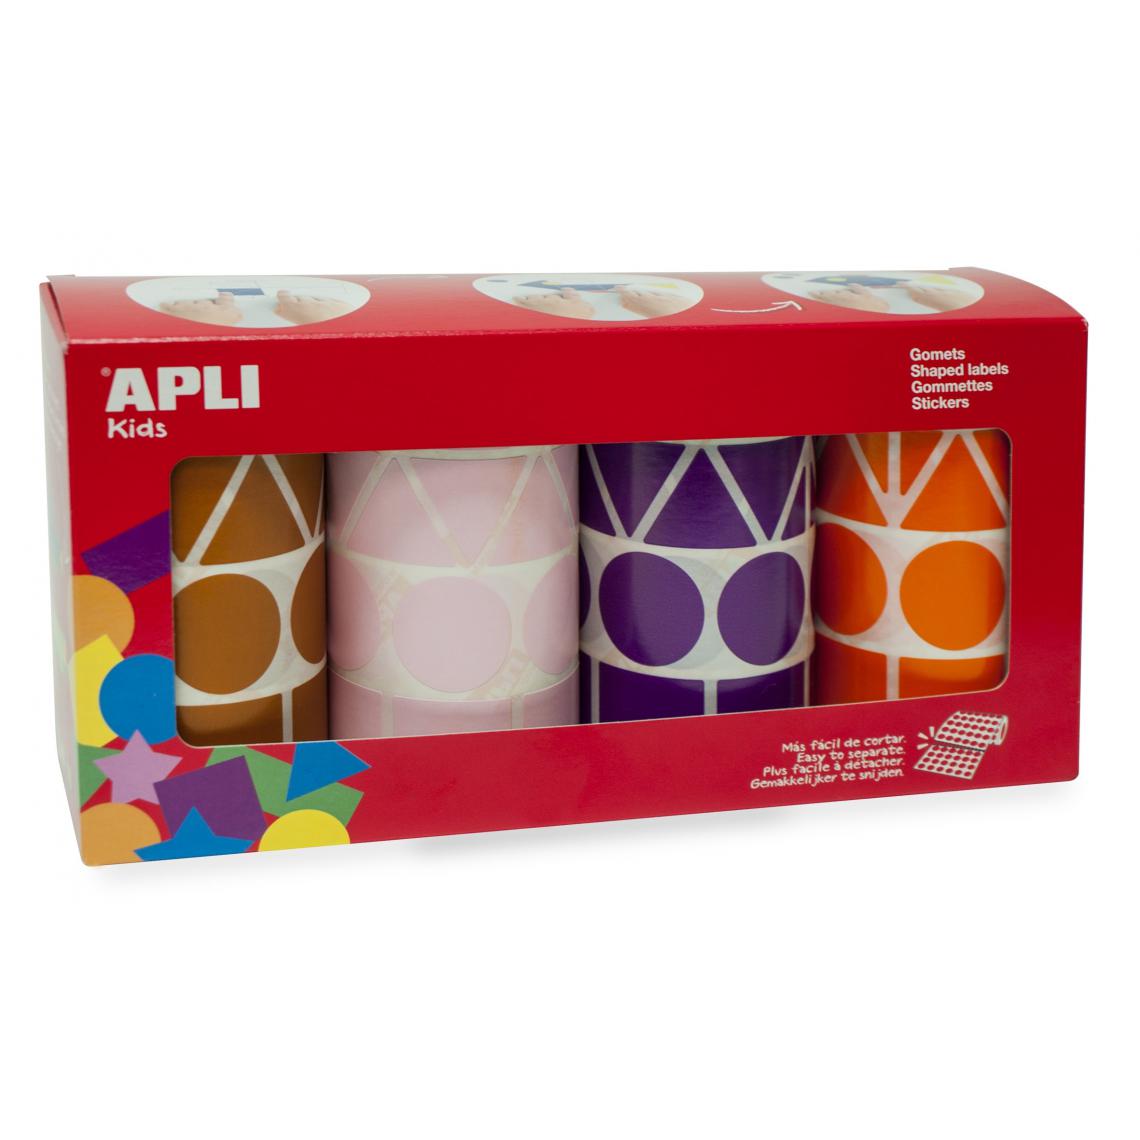 Apli Agipa - Gommettes rouleau 4 formes couleurs tendance x 5 428 - Apli Agipa - Colle & adhésif